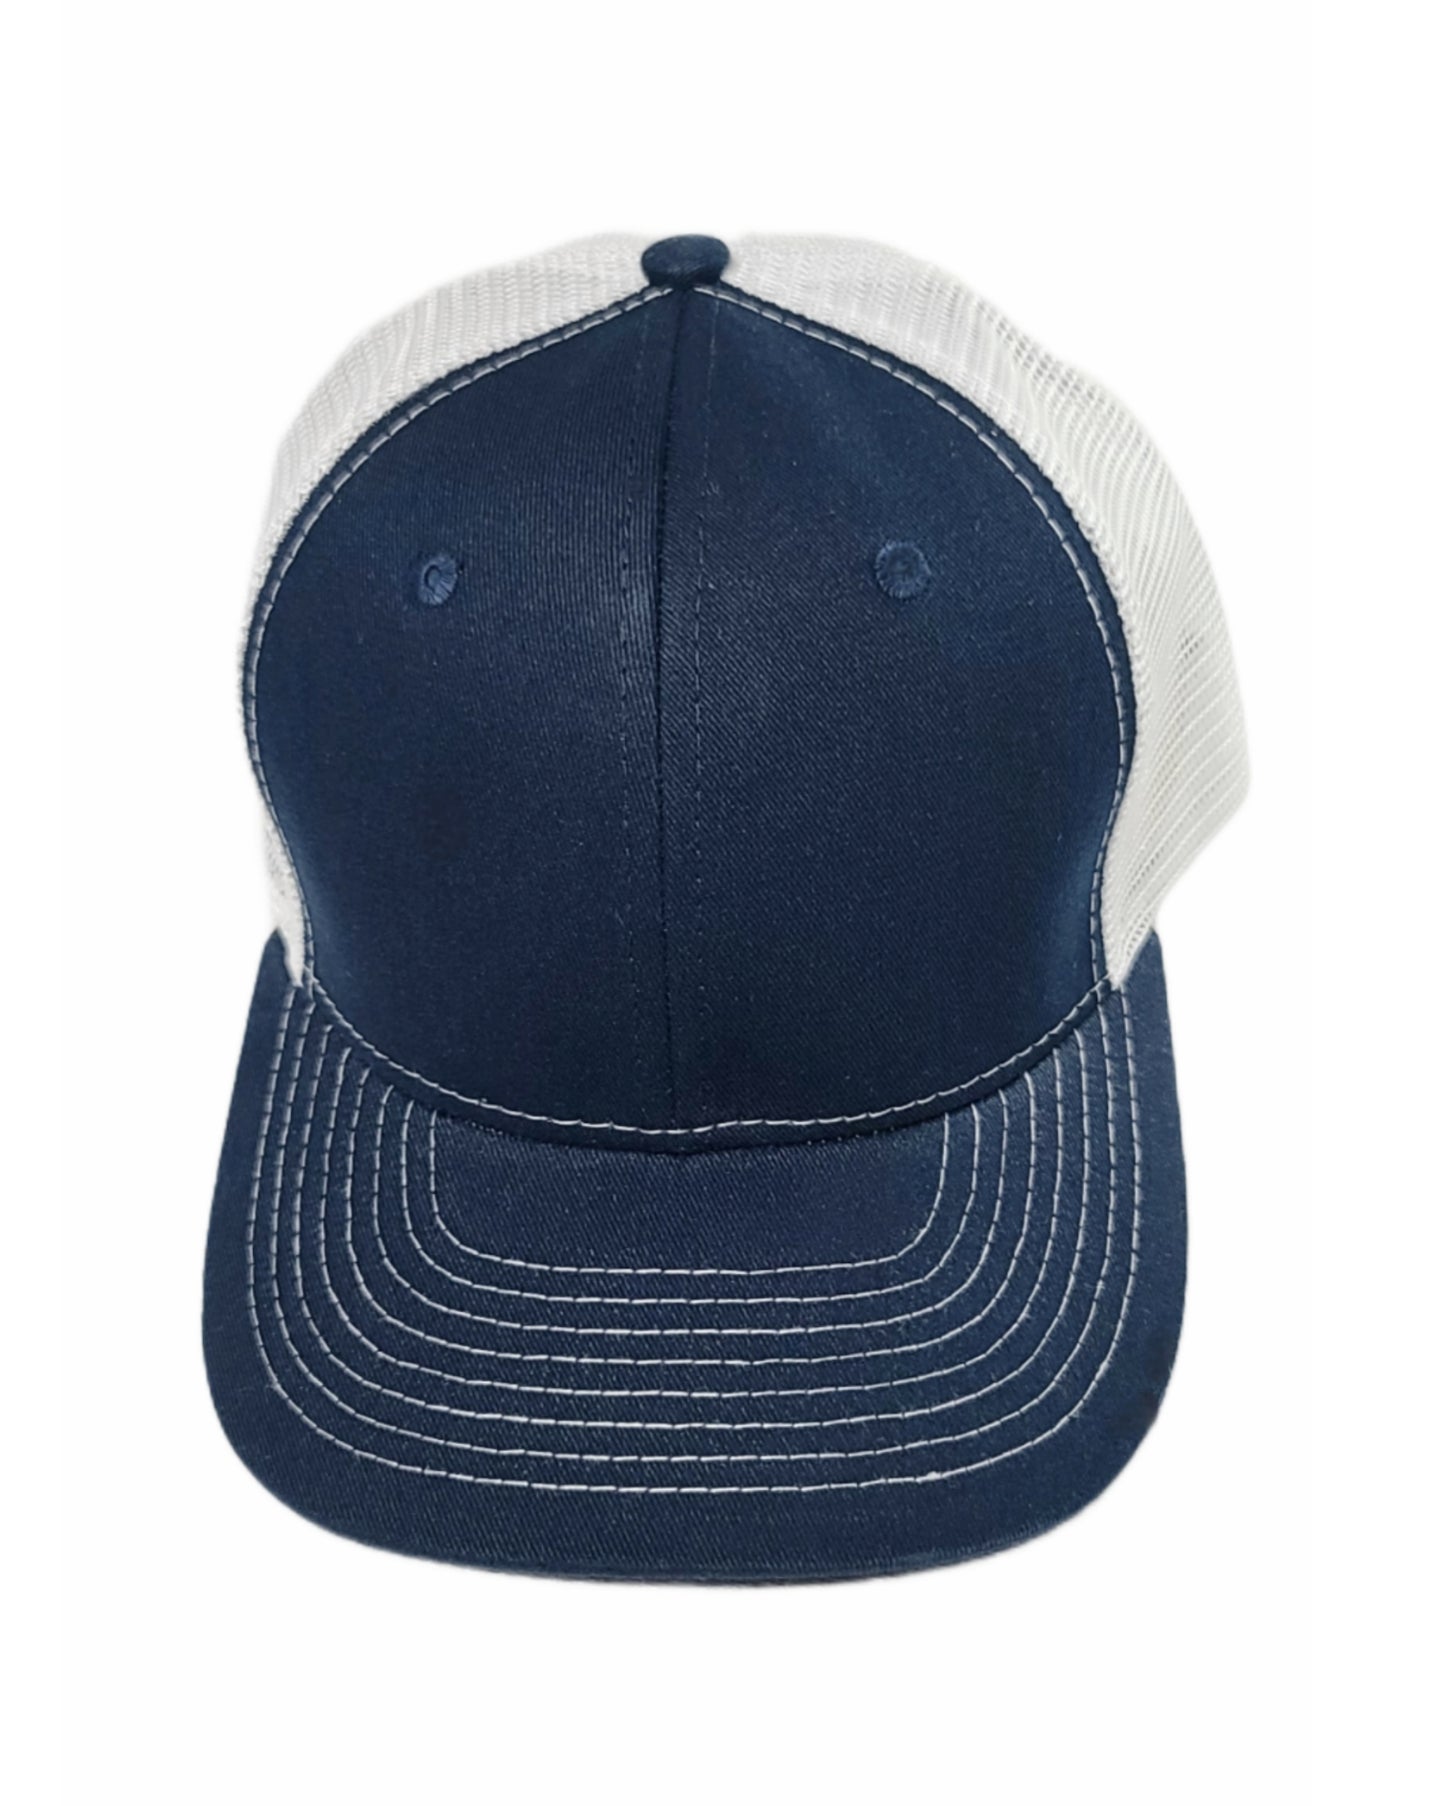 navy blue and white mesh trucker hat blank caps Calitrendz